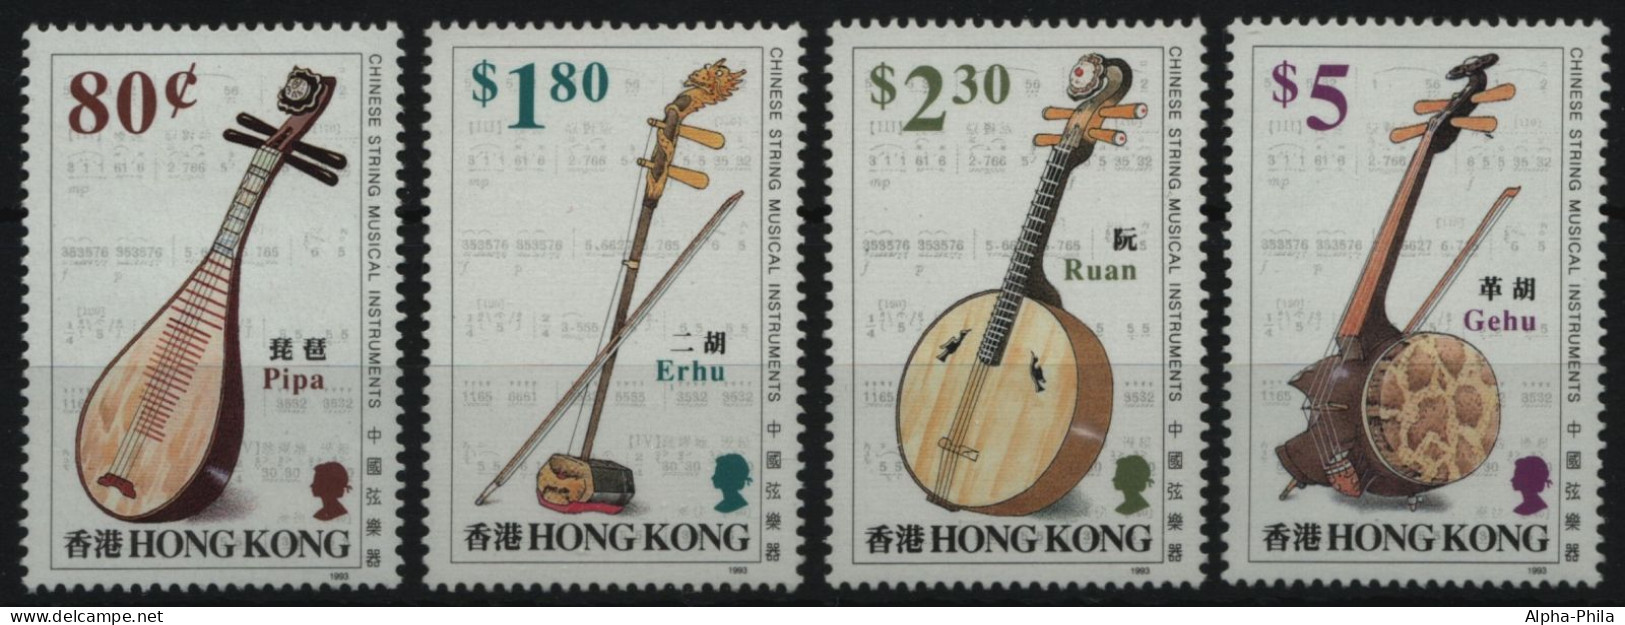 Hongkong 1993 - Mi-Nr. 687-690 ** - MNH - Musikinstrumente - Unused Stamps